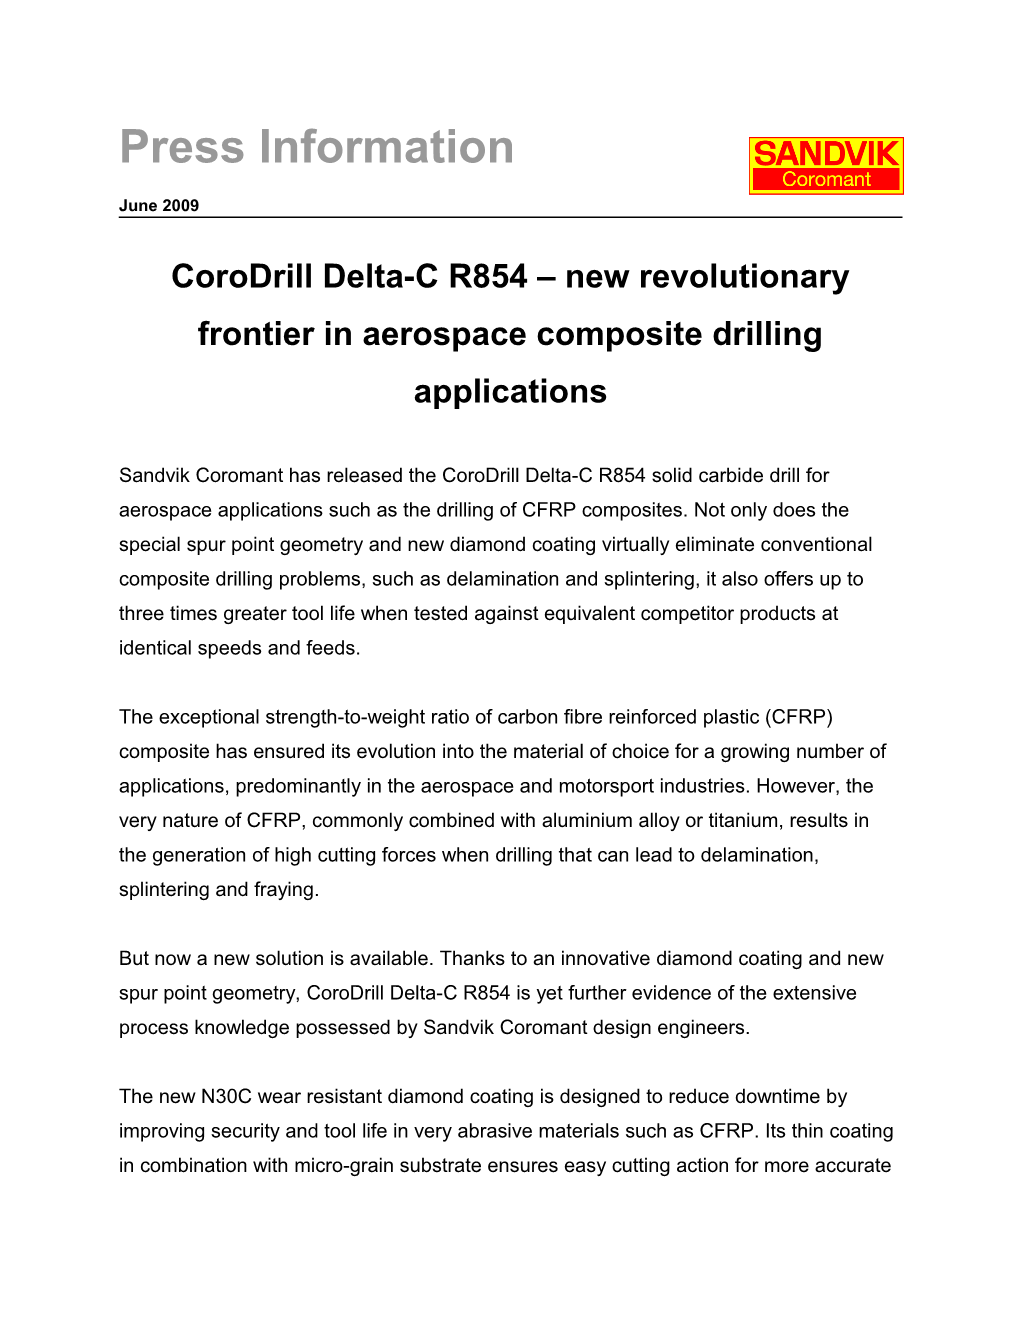 Corodrill Delta-C R854 New Revolutionary Frontier in Aerospace Composite Drilling Applications